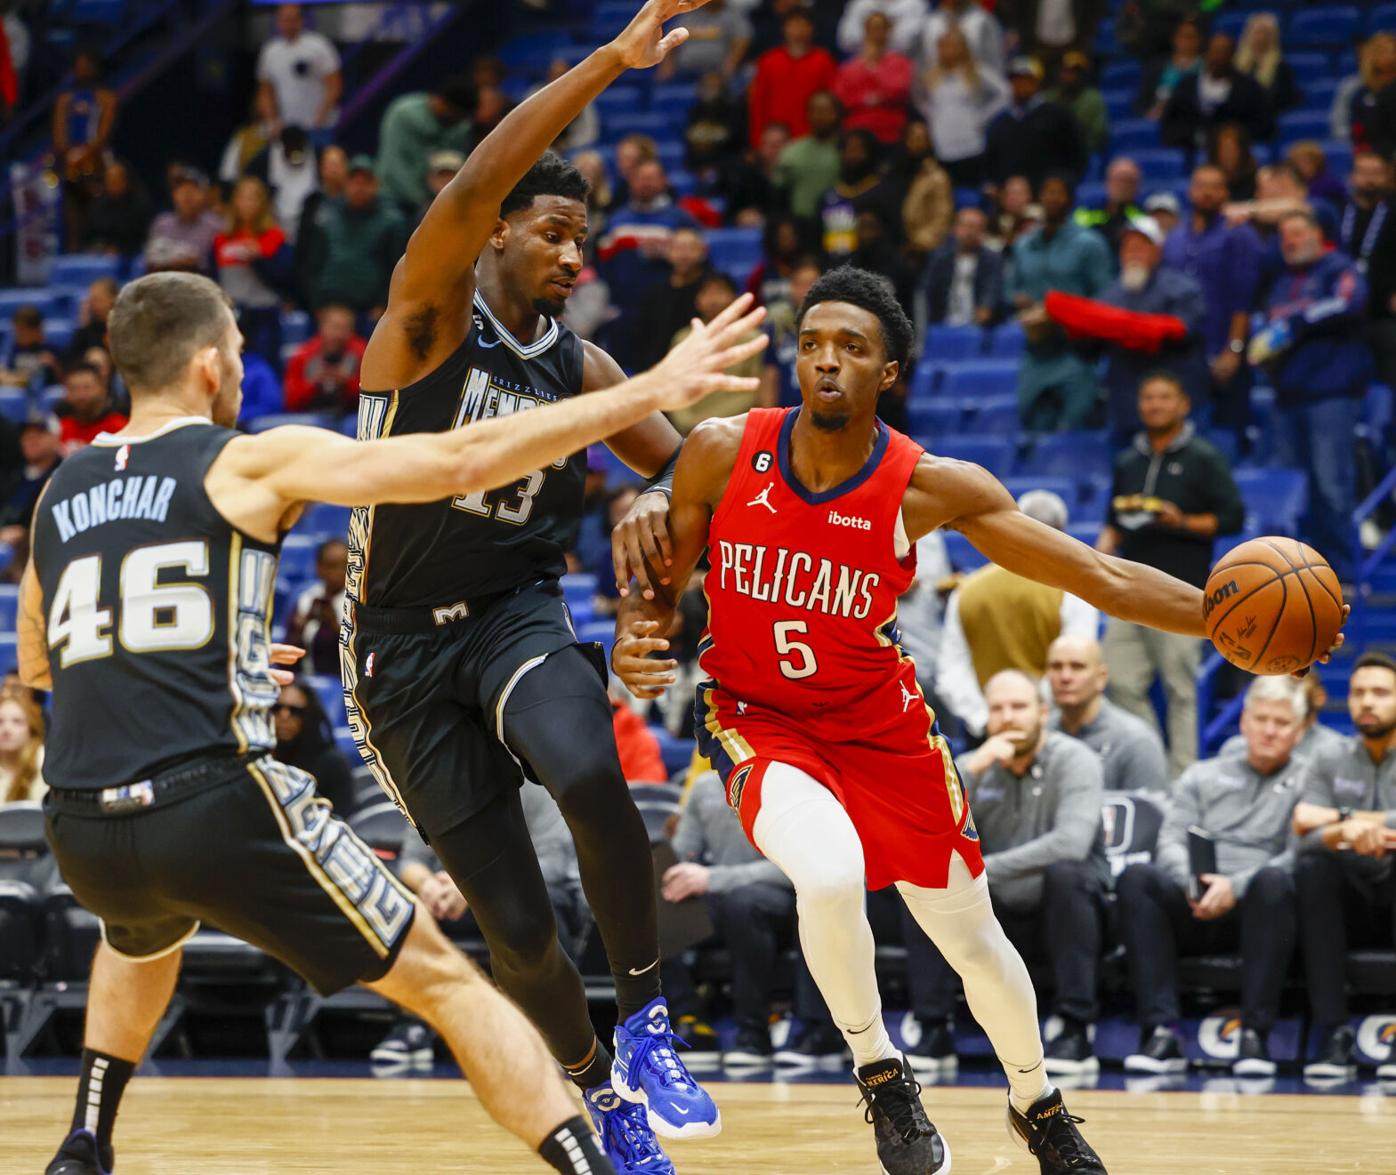 Sports digest: CJ McCollum, Pelicans beat Grizzlies without